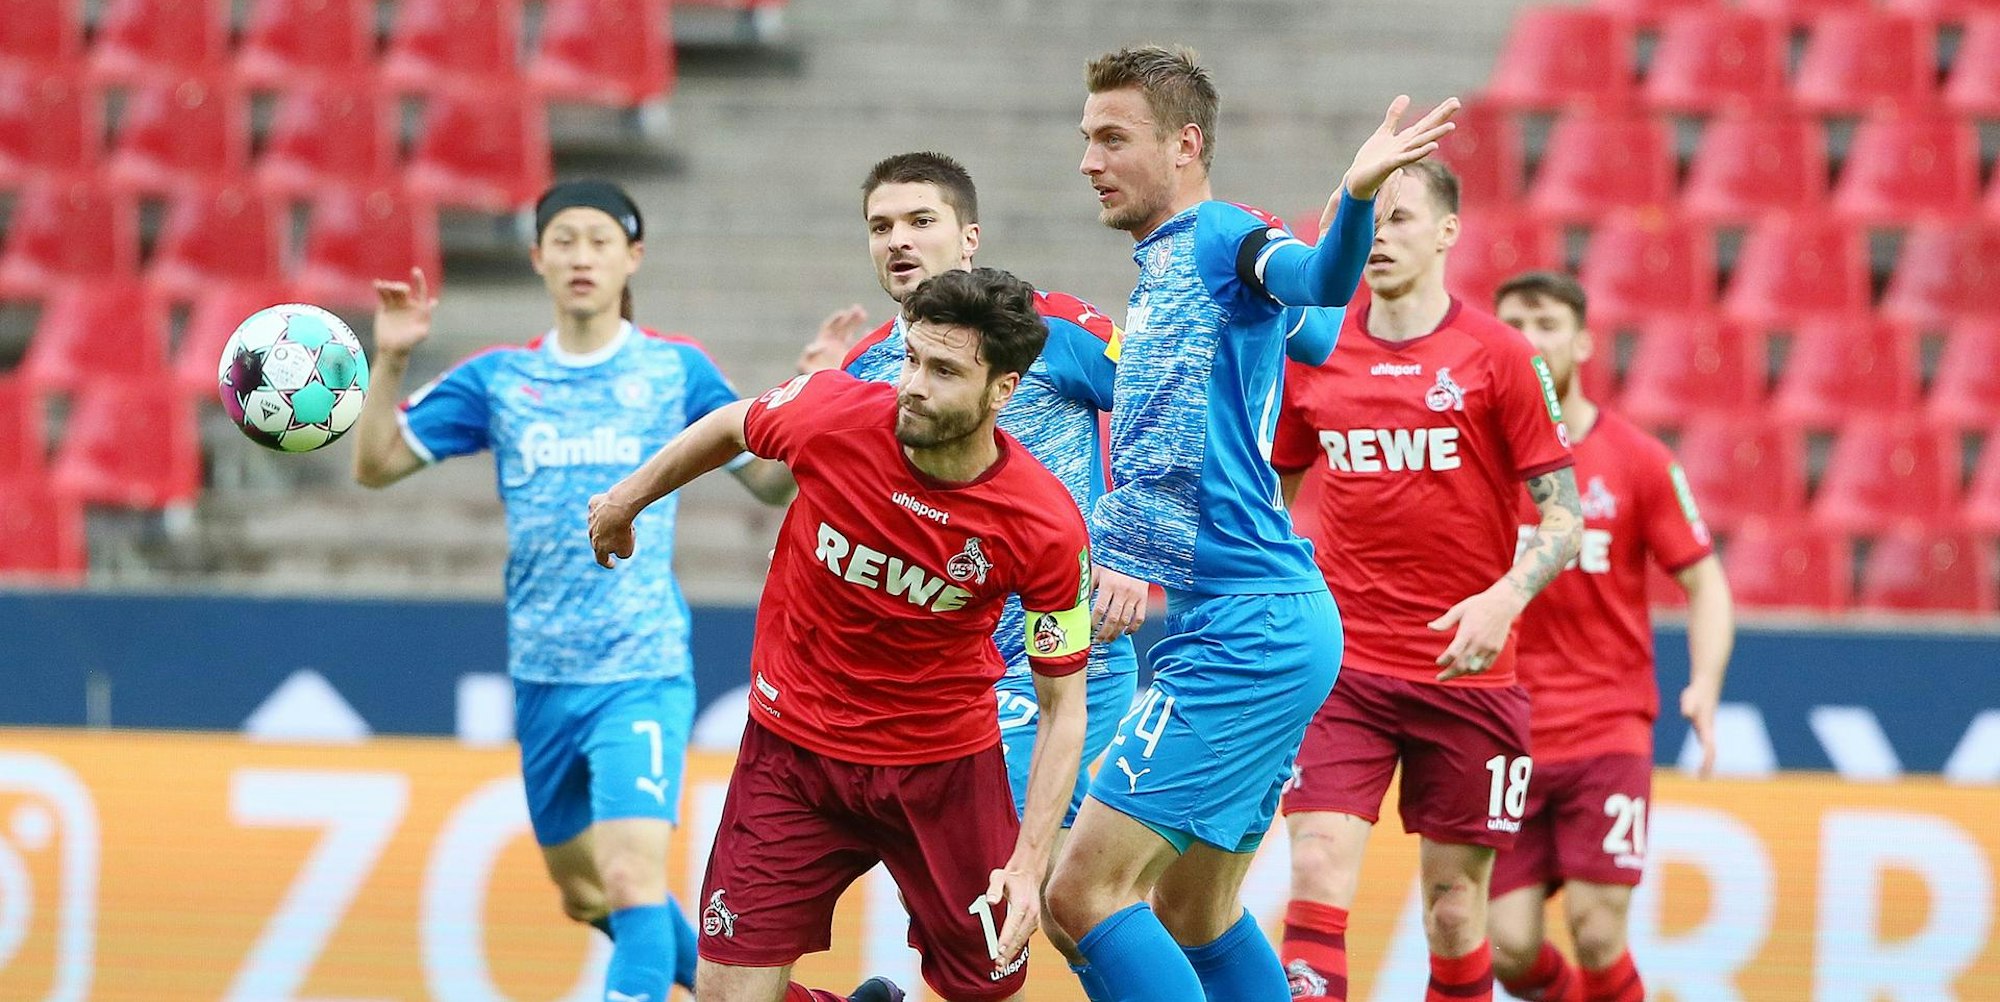 Hector Relegation gegen Kiel